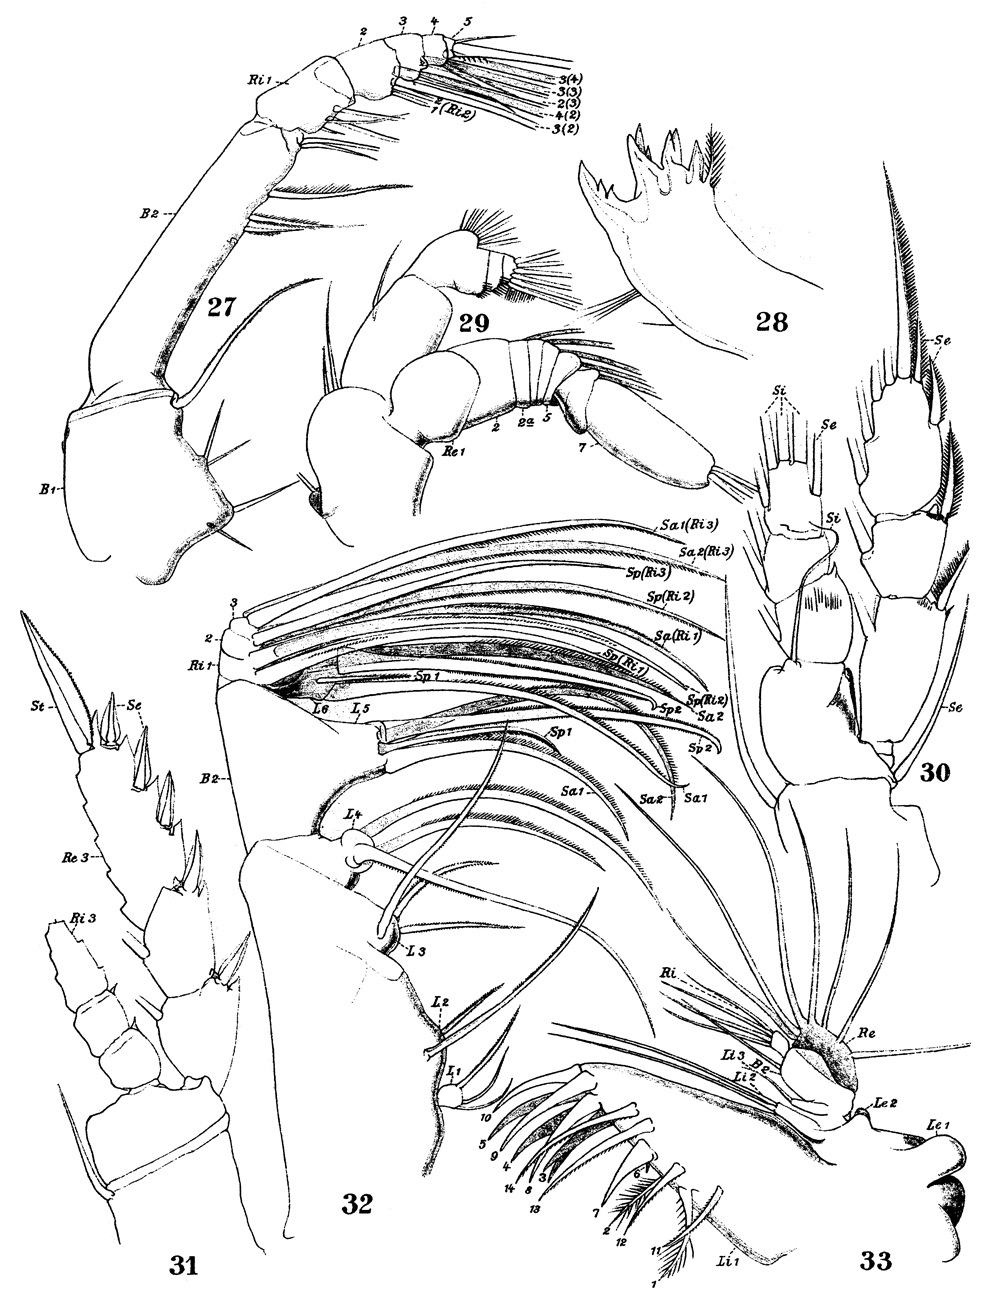 Species Nullosetigera giesbrechti - Plate 5 of morphological figures